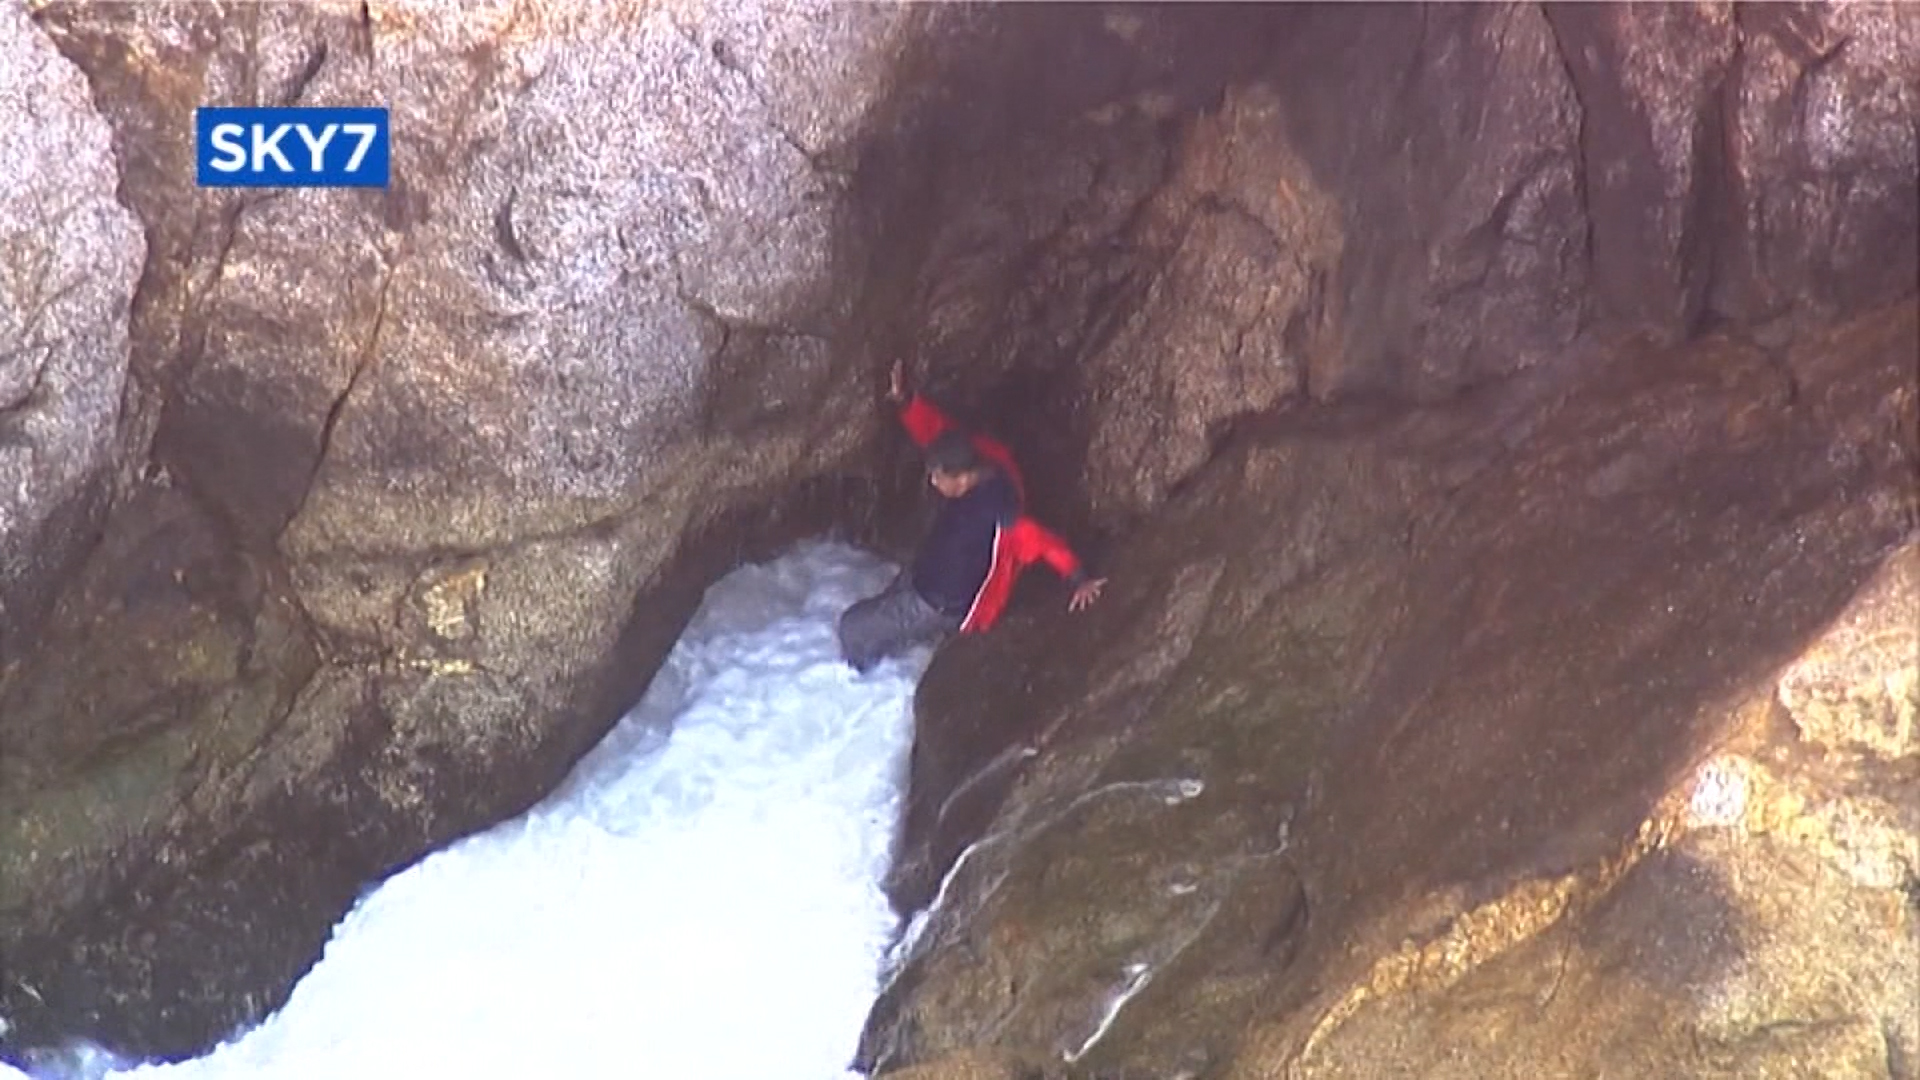 Man survives after van plunges off cliff - CNN Video